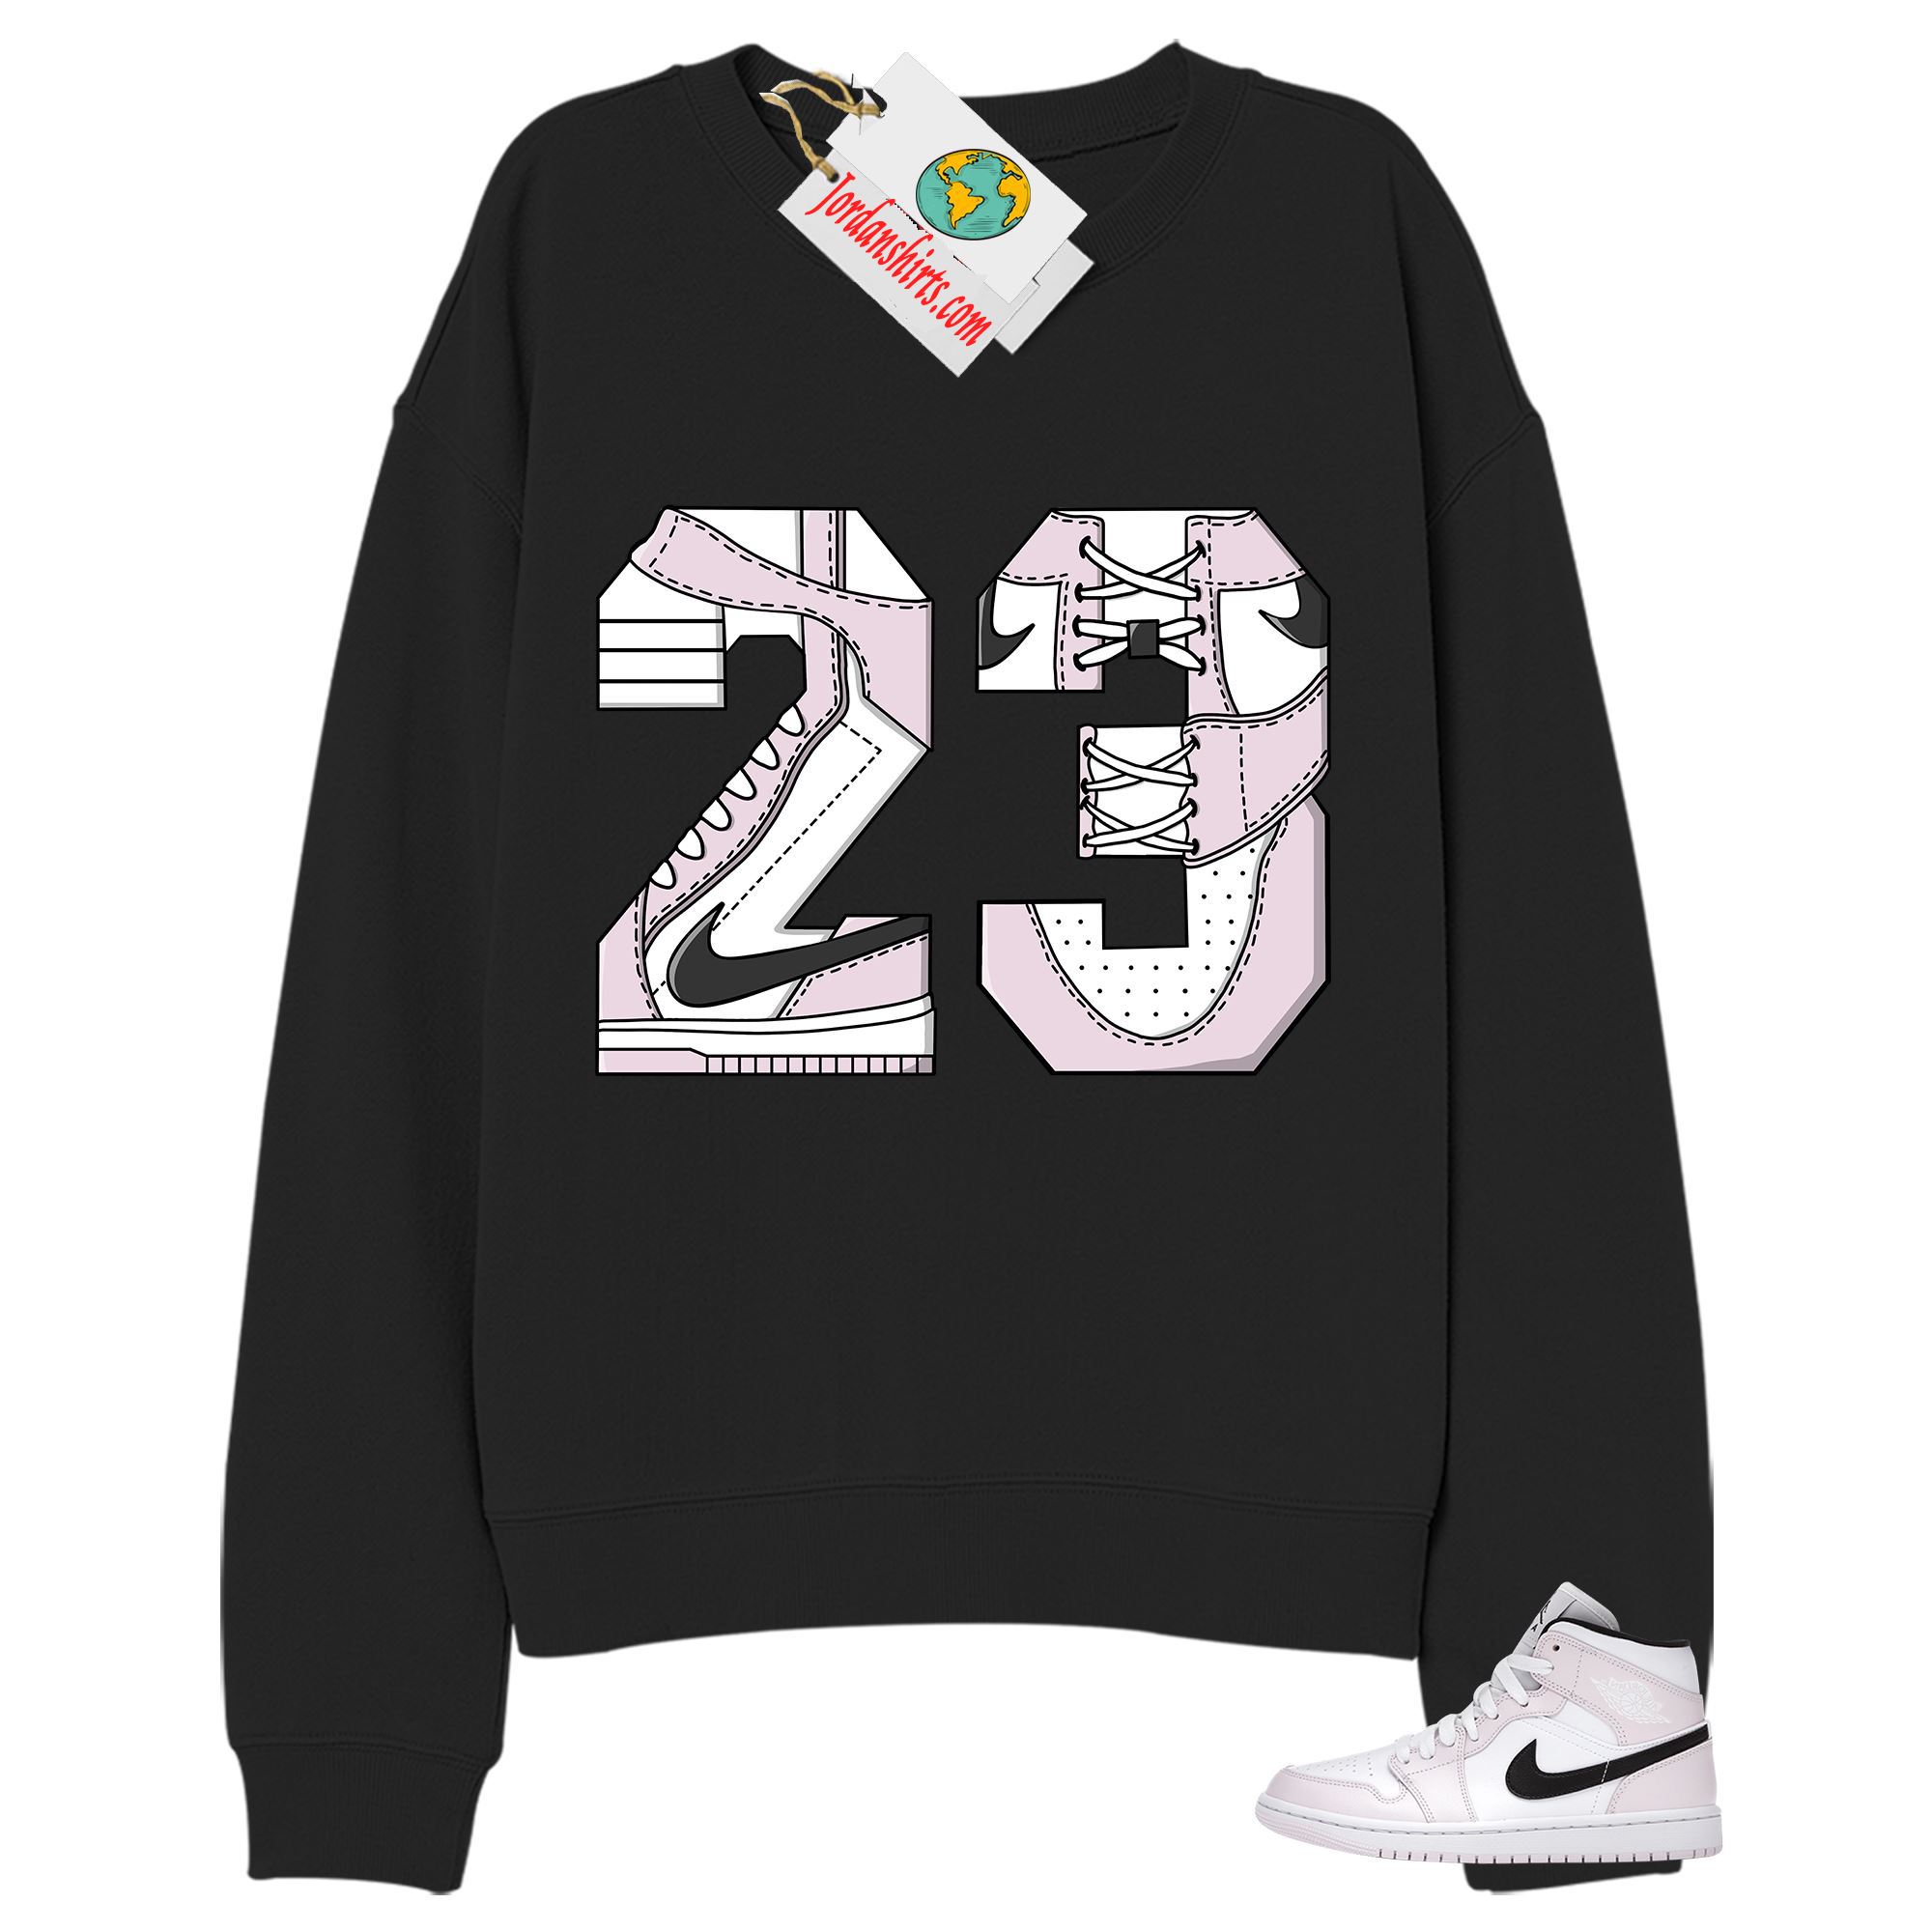 Jordan 1 Sweatshirt, 23 Black Sweatshirt Air Jordan 1 Barely Rose 1s Full Size Up To 5xl